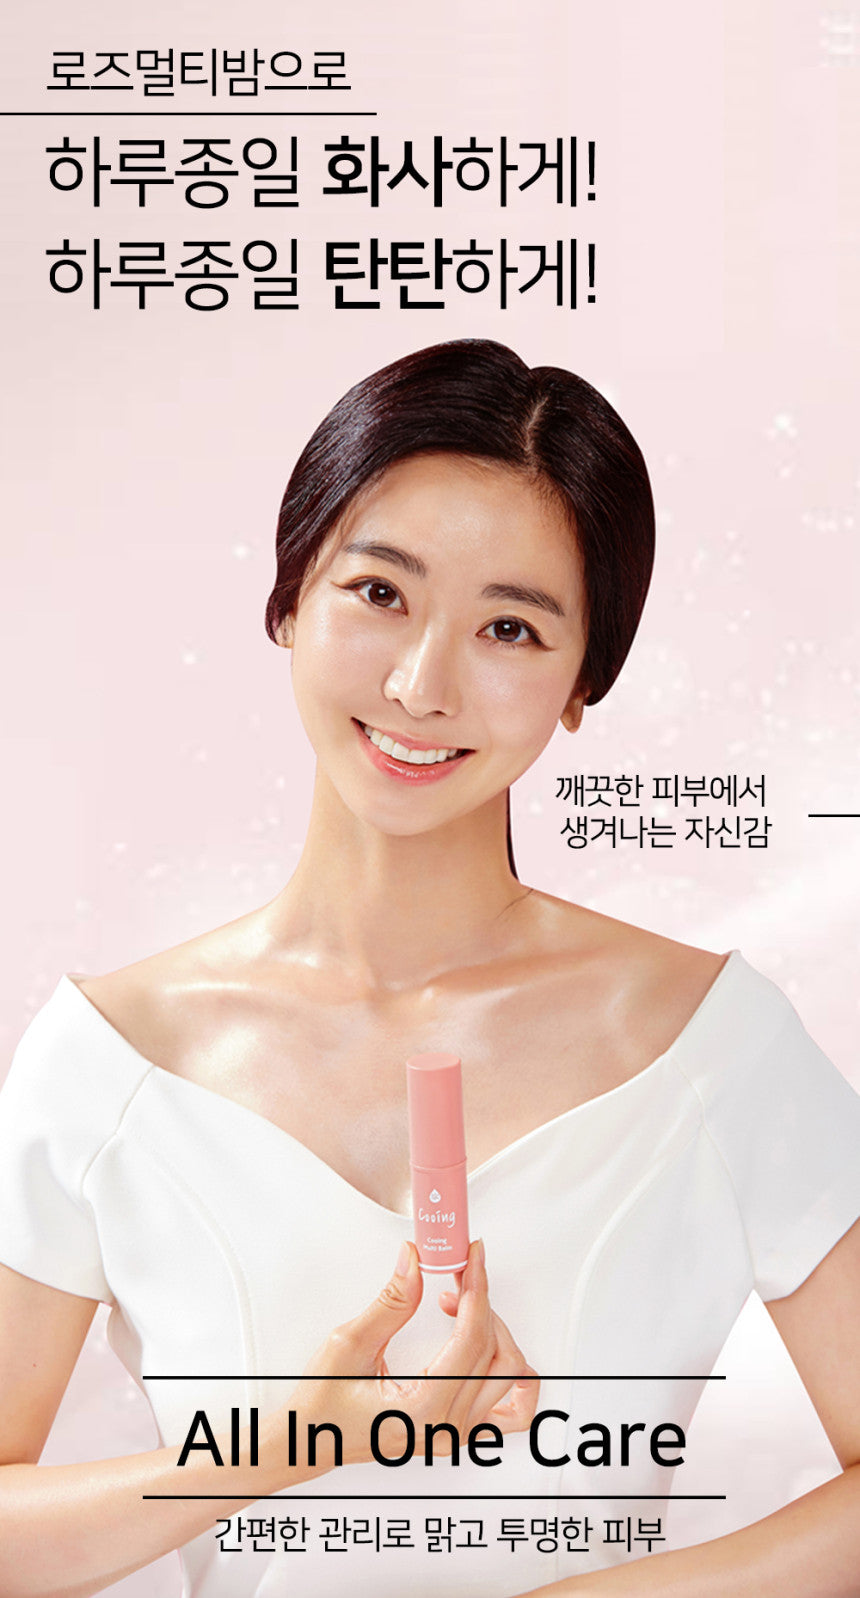 Rose Multi Balms Sticks Absolute Neck Wrinkles Nasolabial Folds Lines Whitening Moisturizers Facial Skincare Korean Beauty Like Baby Face Anti-ageing